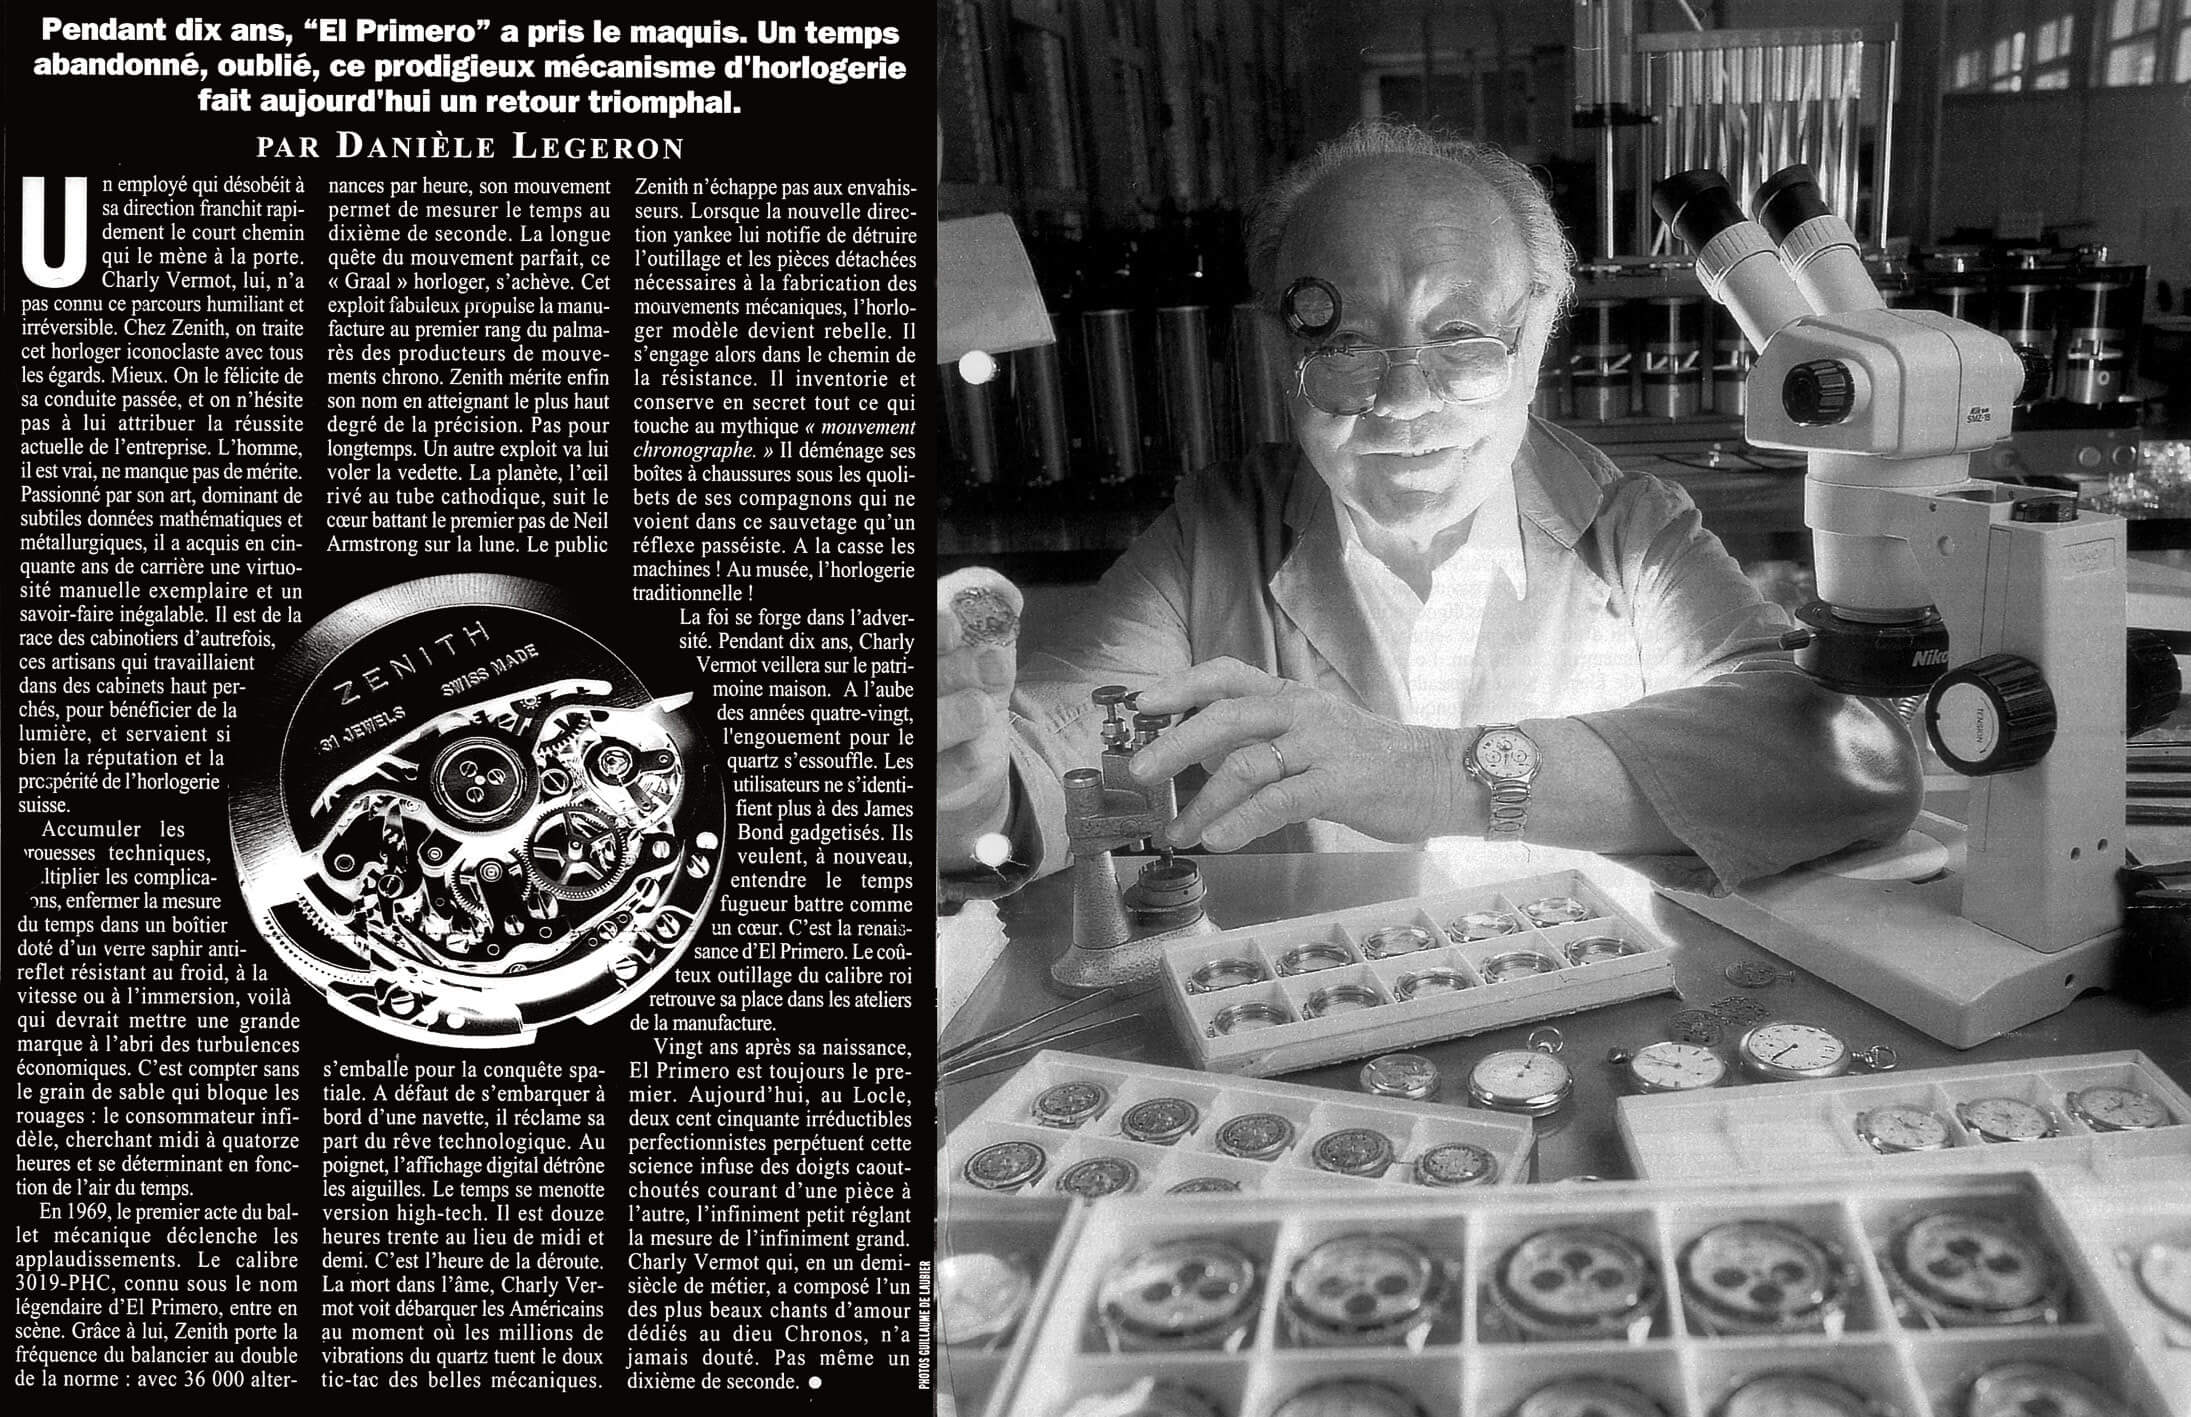 Charles Vermot saved the Zenith El Primero chronograph movement